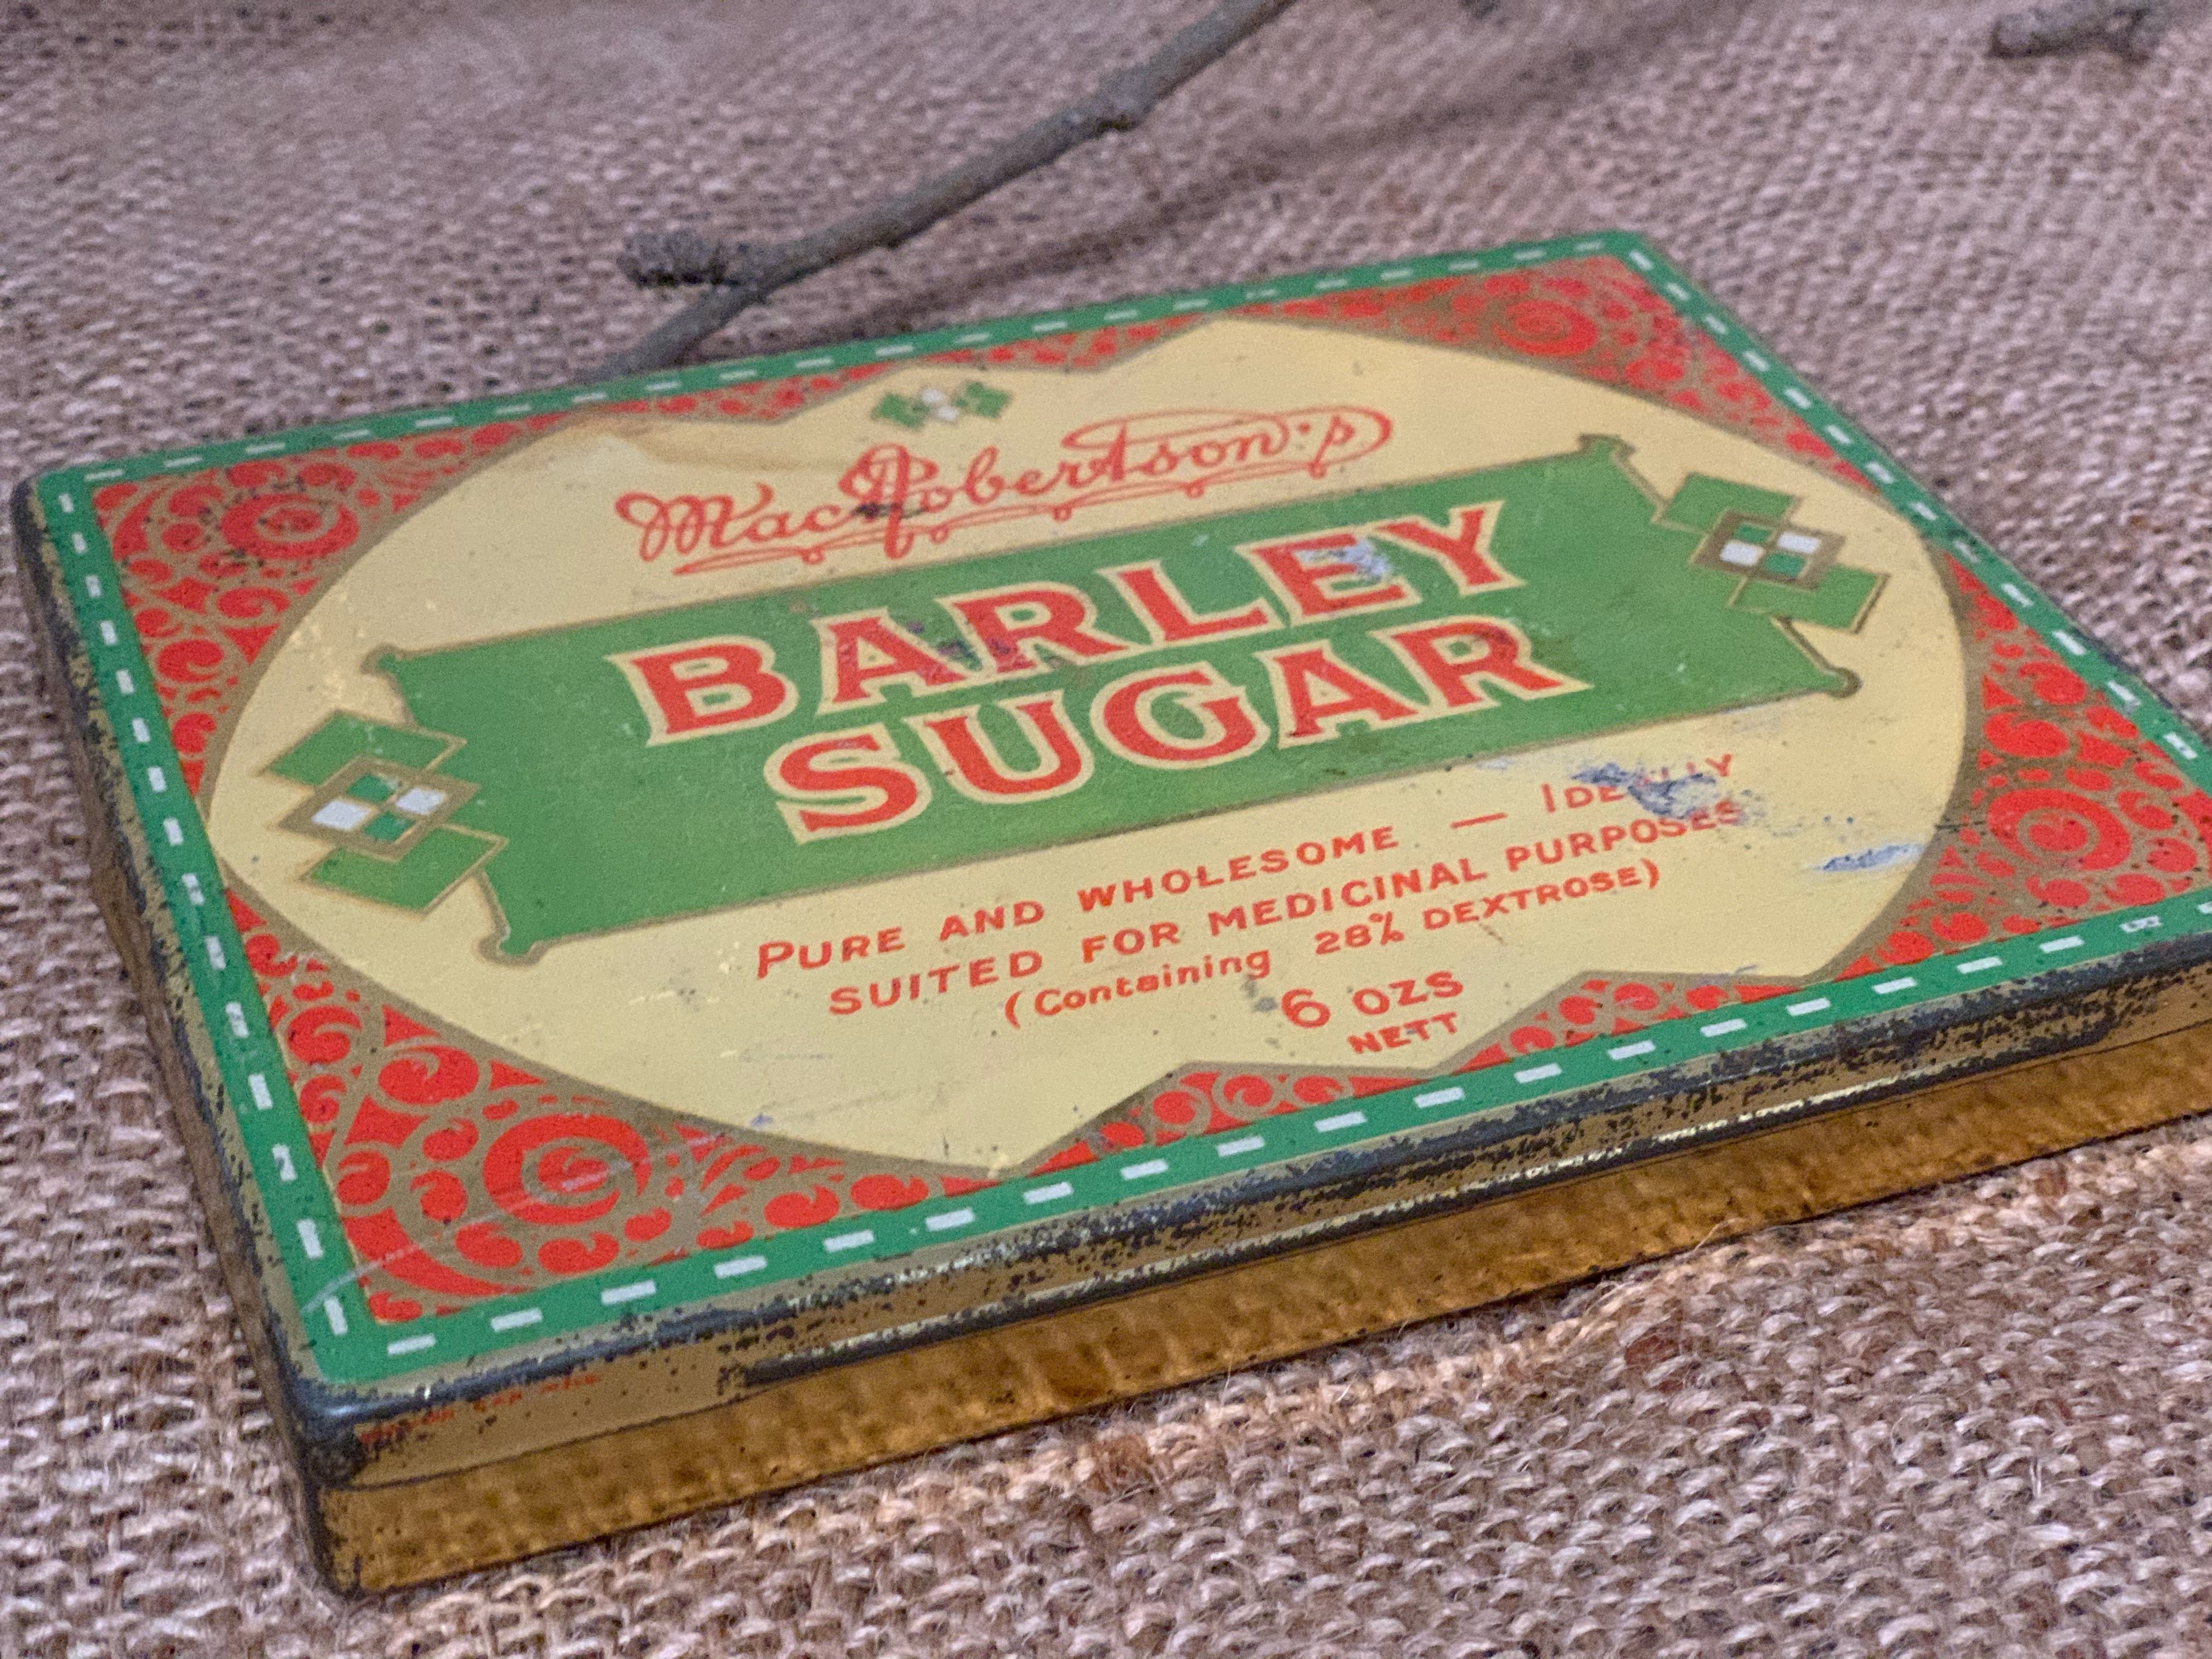 Vintage Barley Sugar Tin